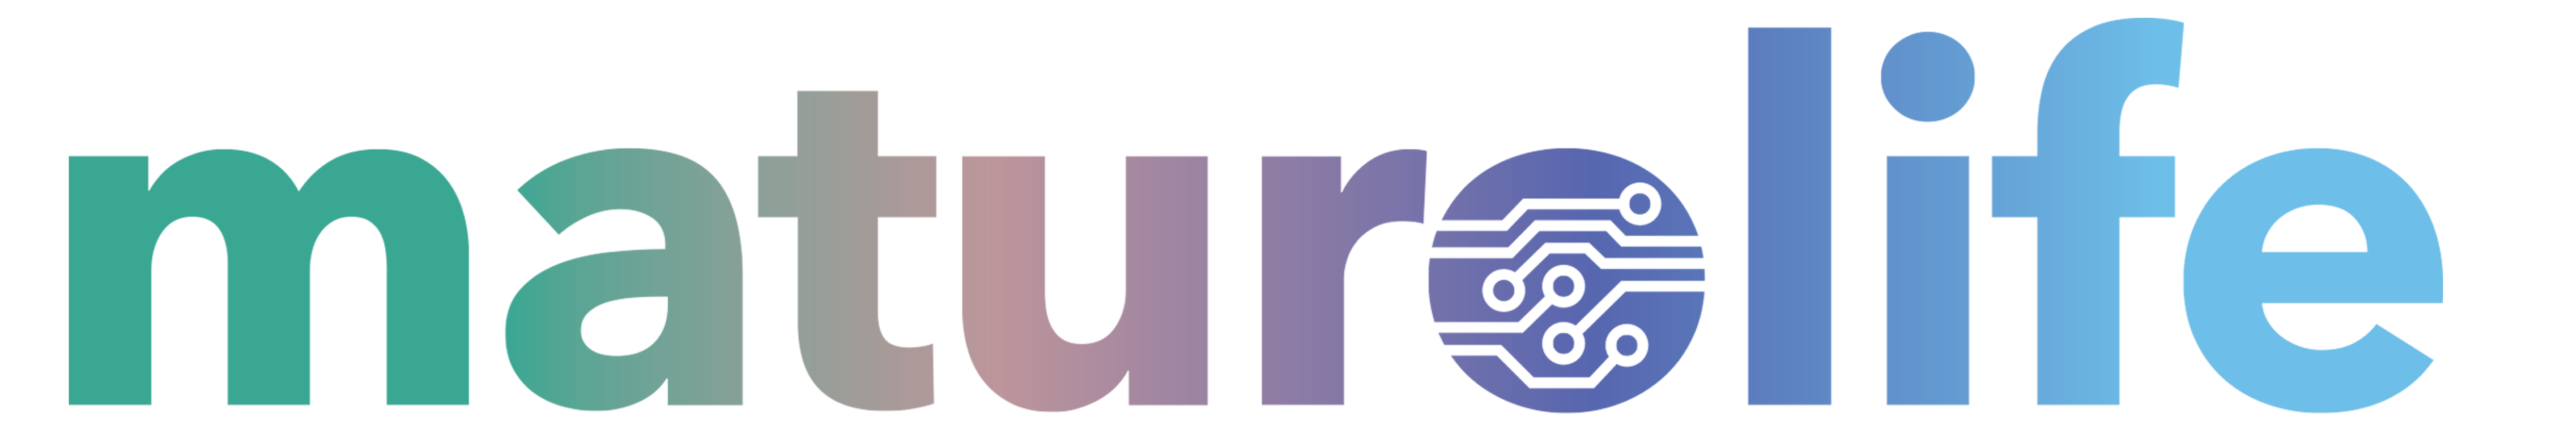 Maturolife_updated_logo